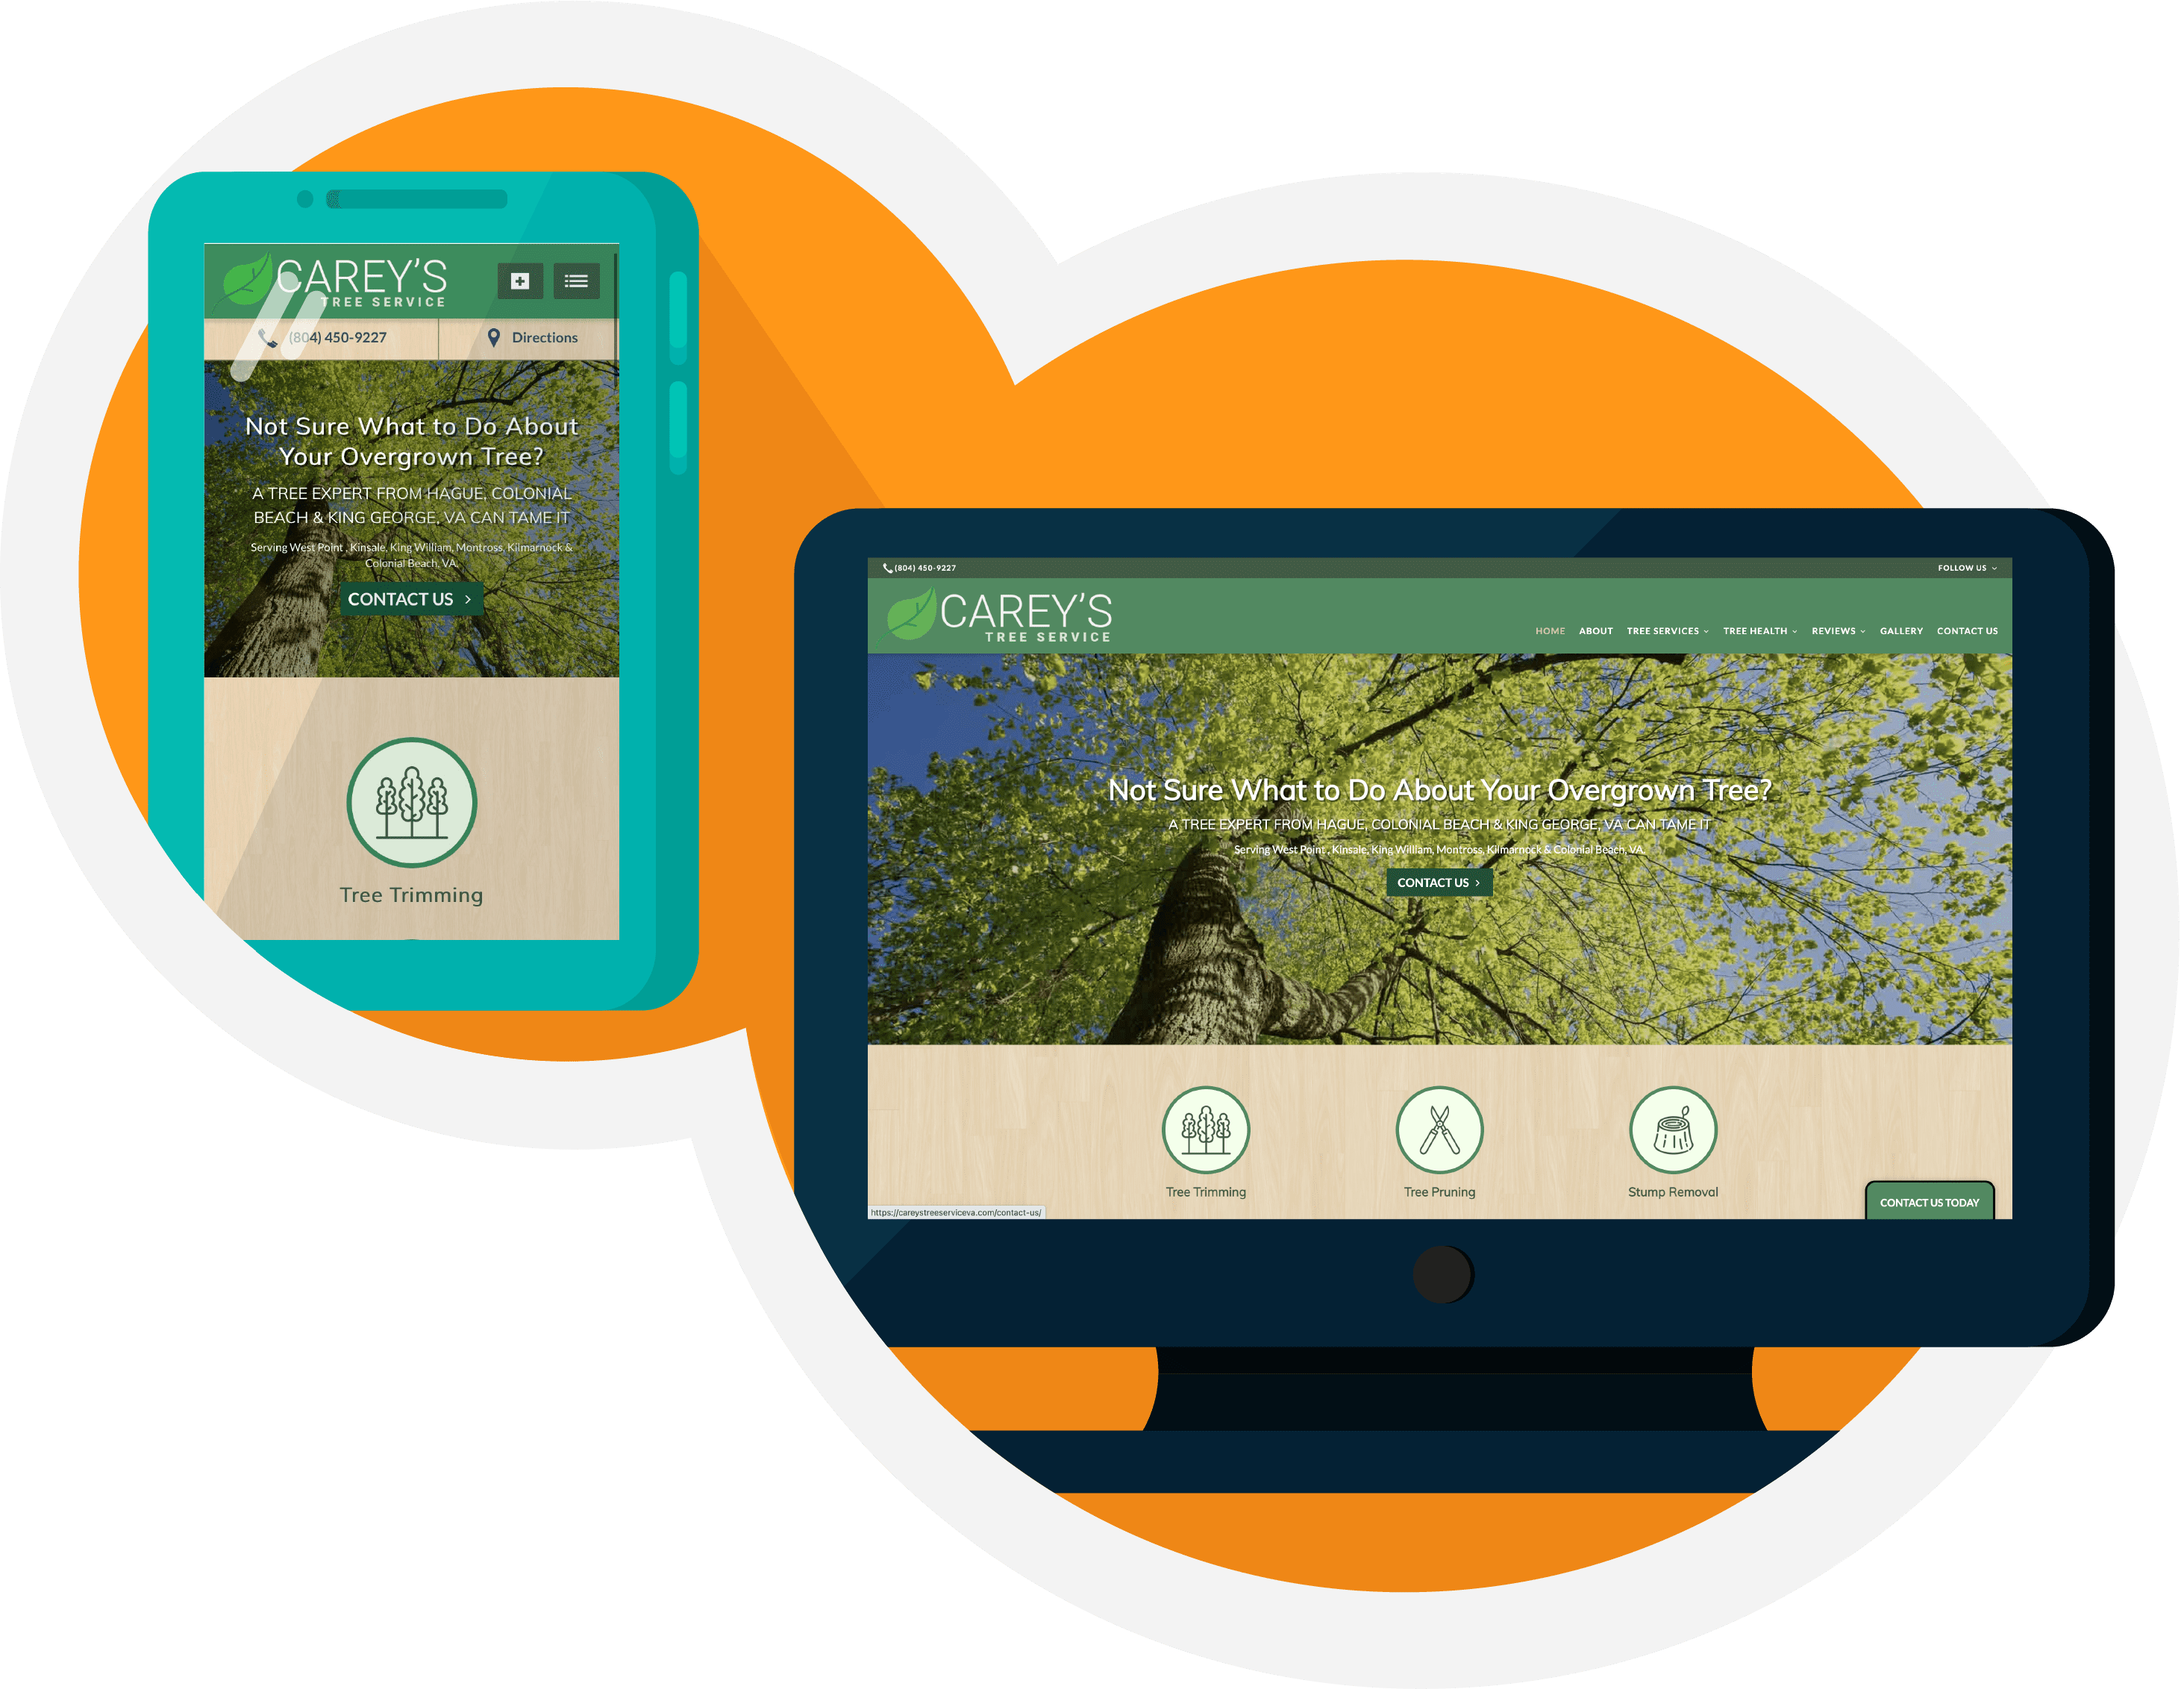 Tree Service Websites Tree Company Web Design Townsquare Interactive